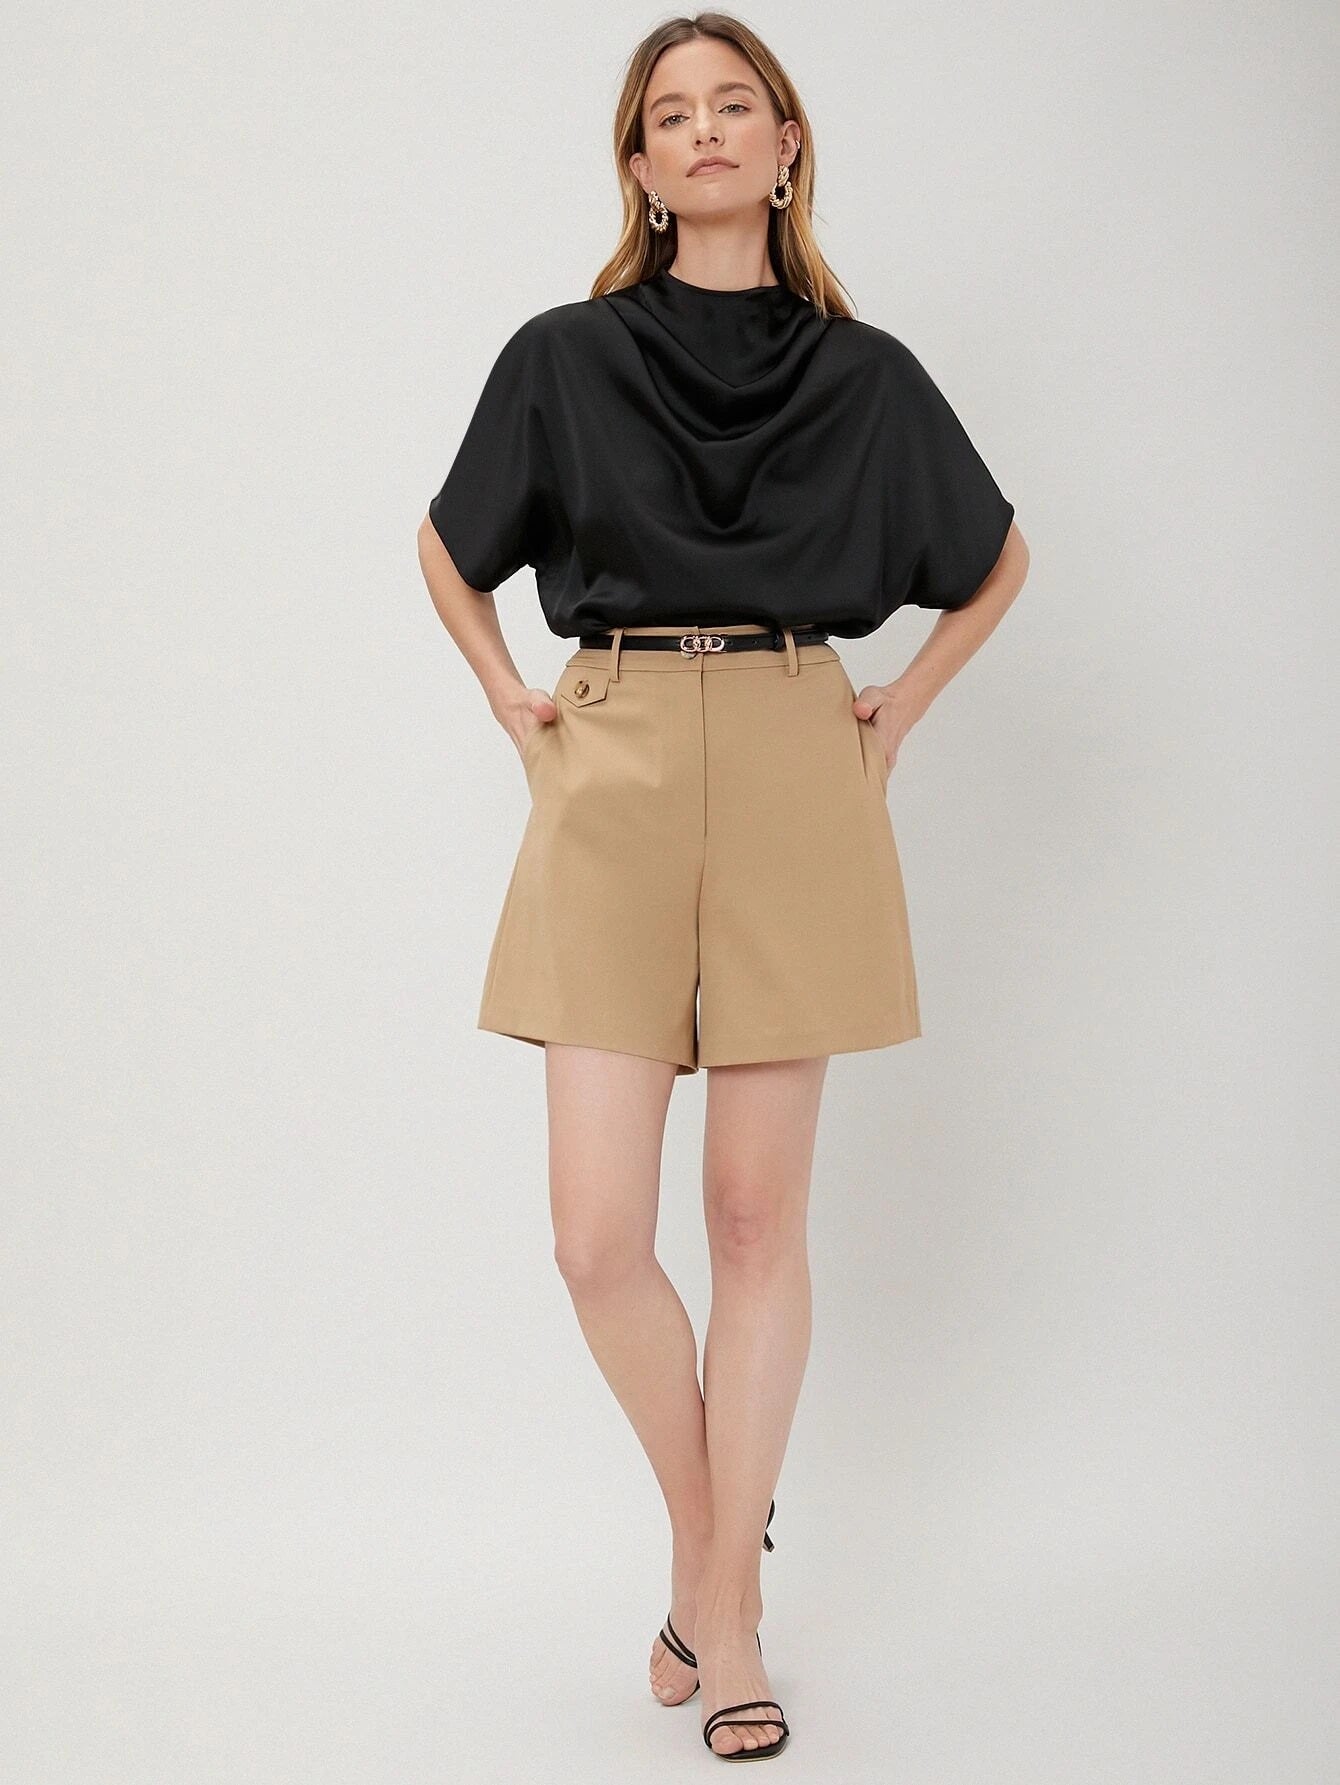 CM-TS225384 Women Casual Seoul Style Draped Cowl Neck Short Sleeve Top - Black